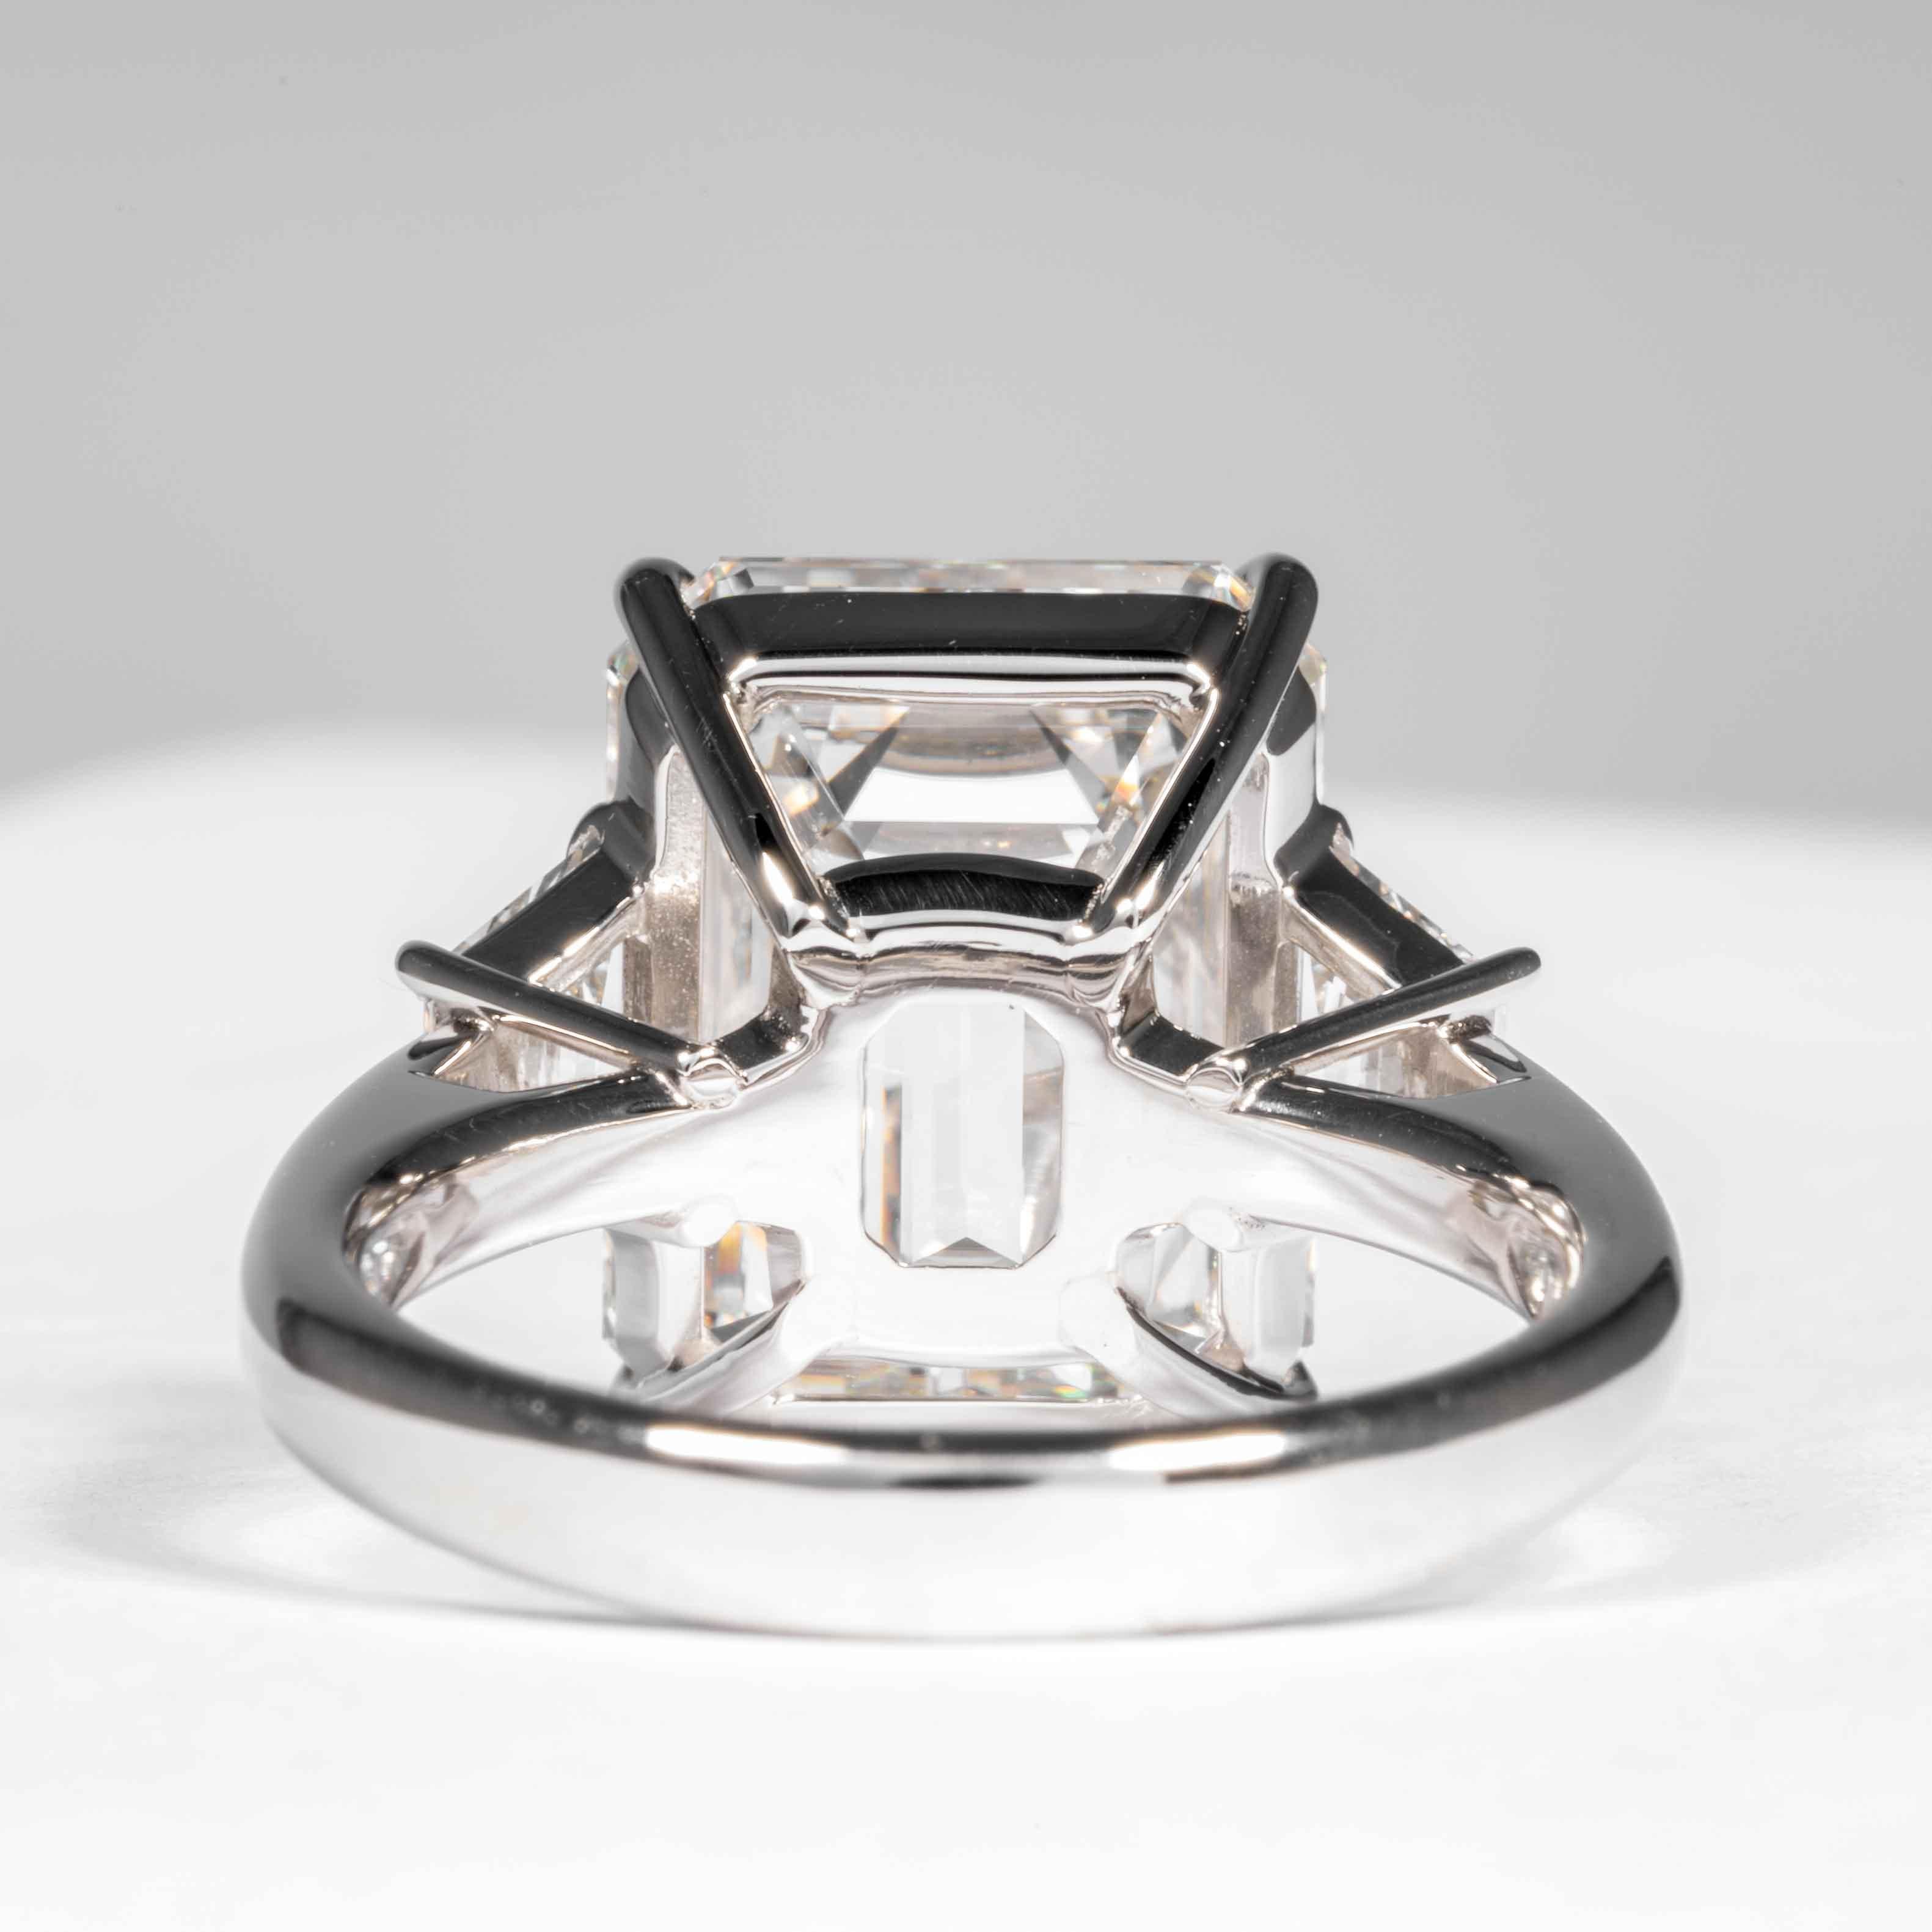 Shreve, Crump & Low GIA Certified 8.97 Carat G VS2 Emerald Cut Diamond Ring For Sale 1